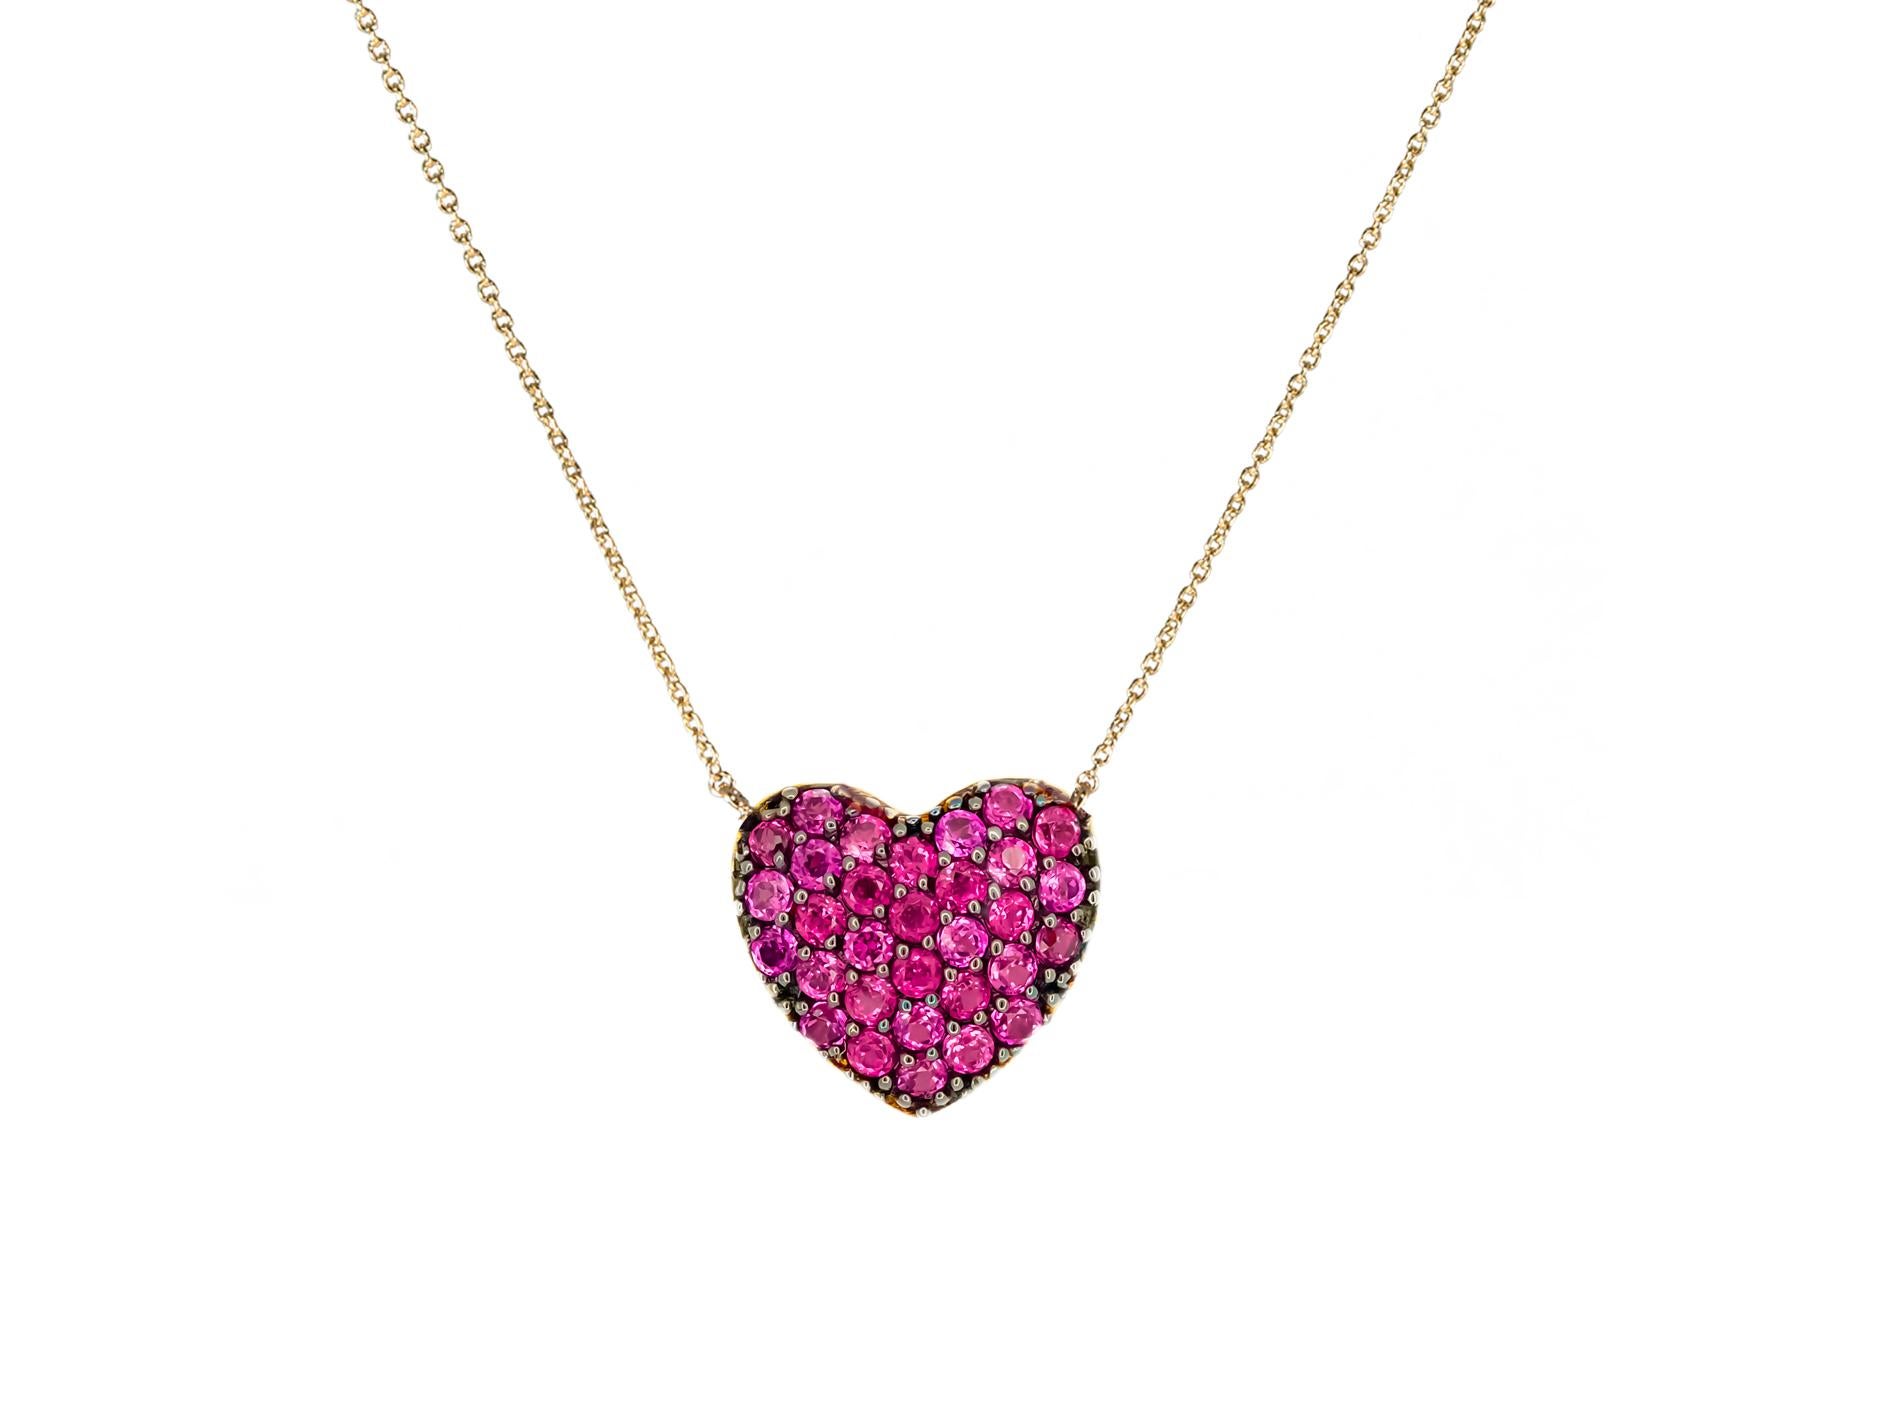 Heart shaped 14k gold pendant necklace.  4